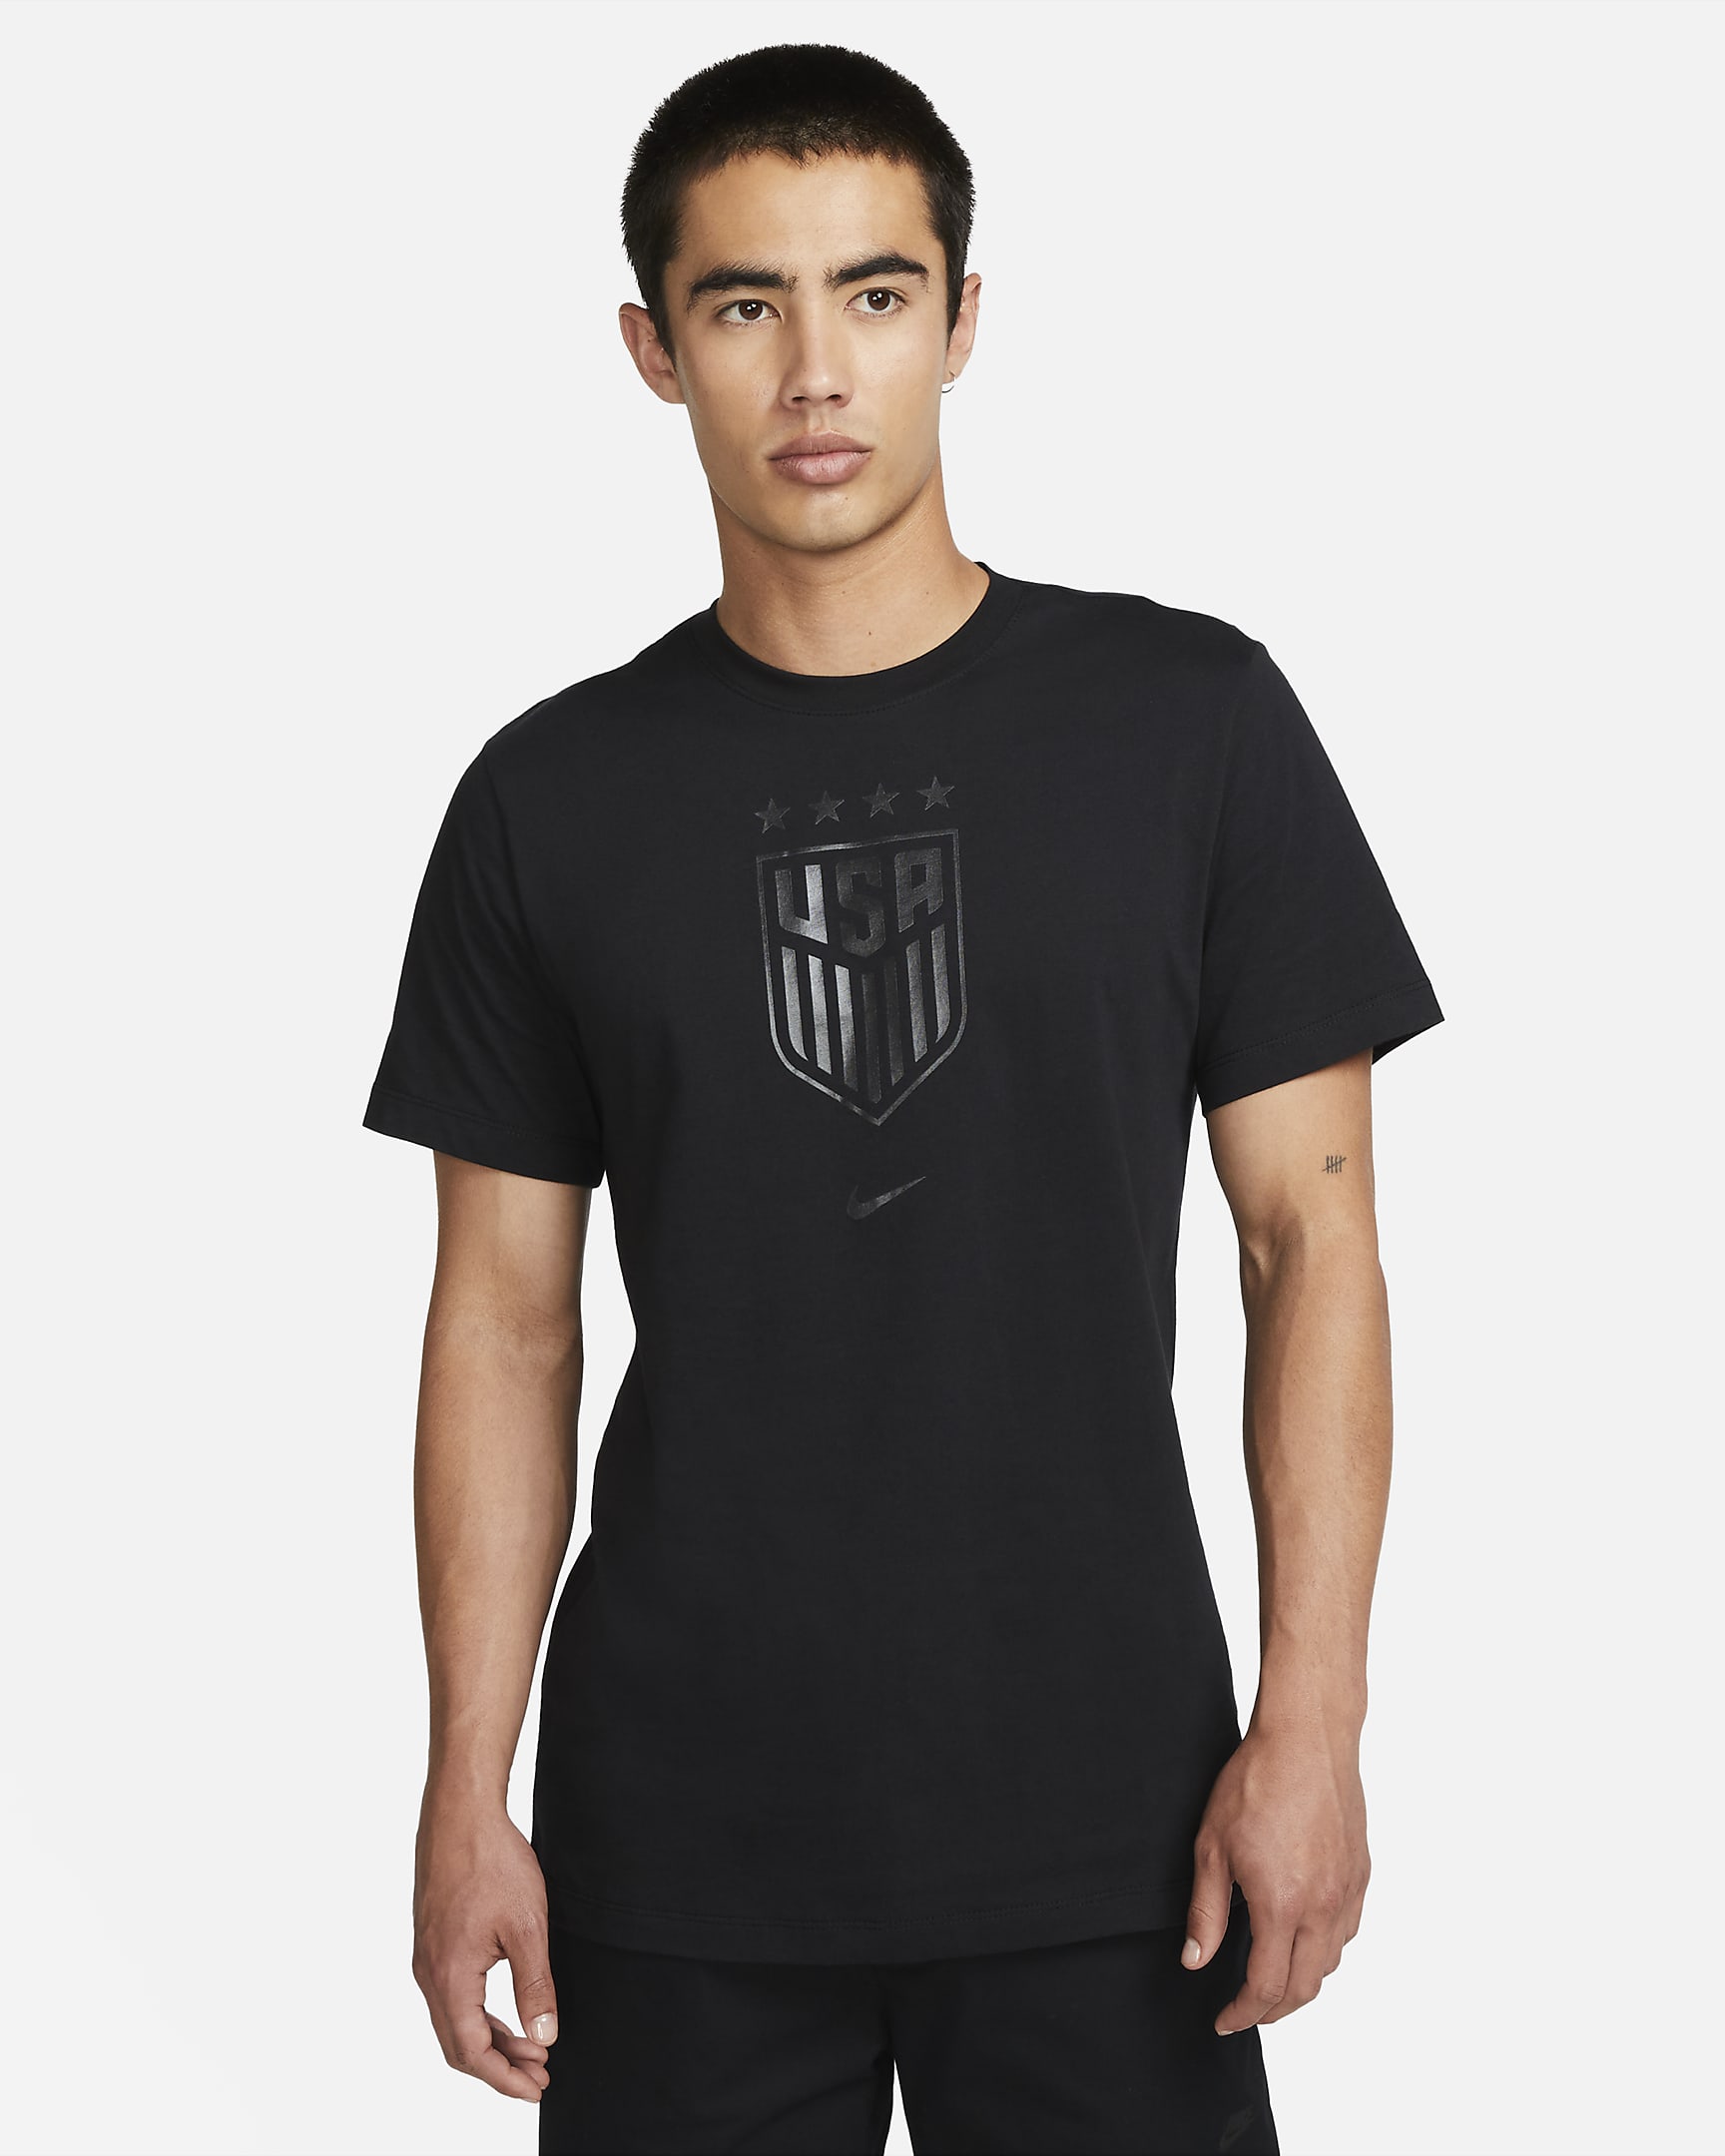 U.S. (4-Star) Men's Soccer T-Shirt. Nike.com